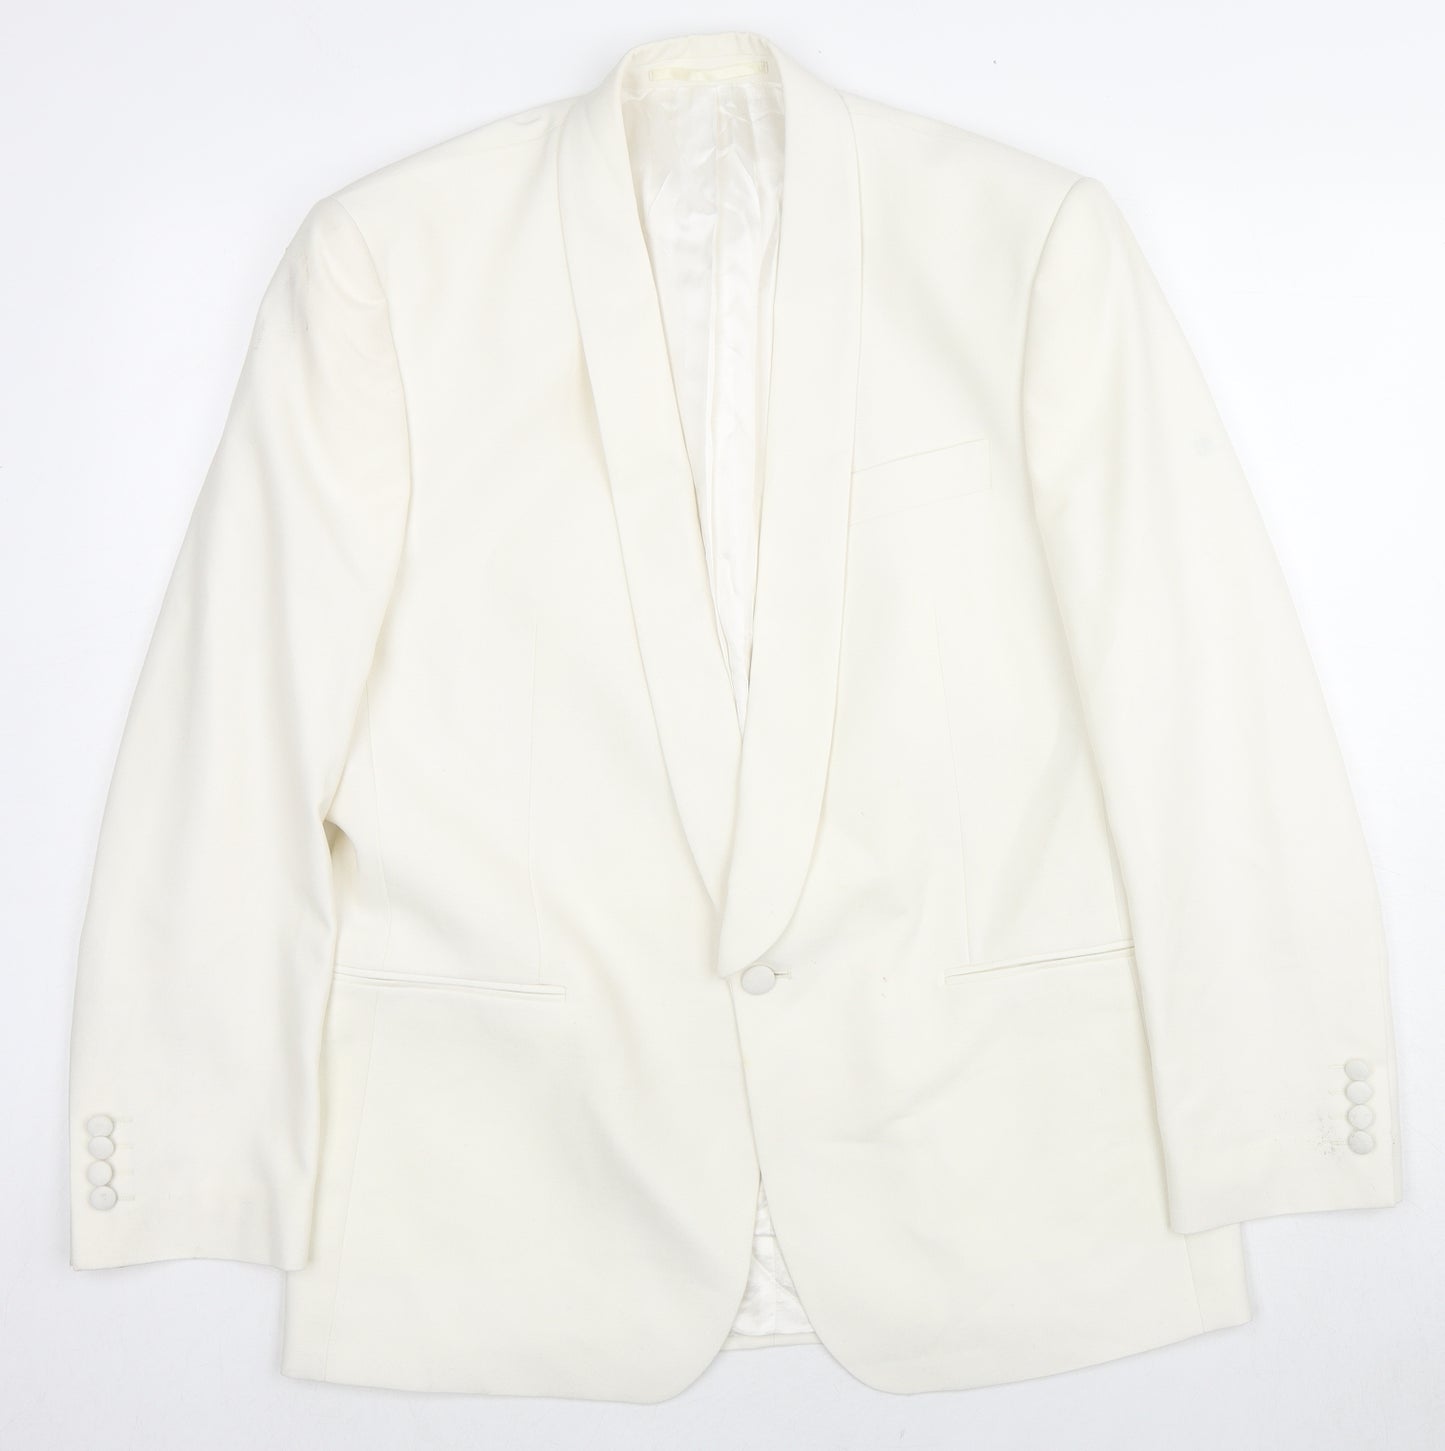 Moss Bros Mens White Polyester Tuxedo Suit Jacket Size 40 Regular